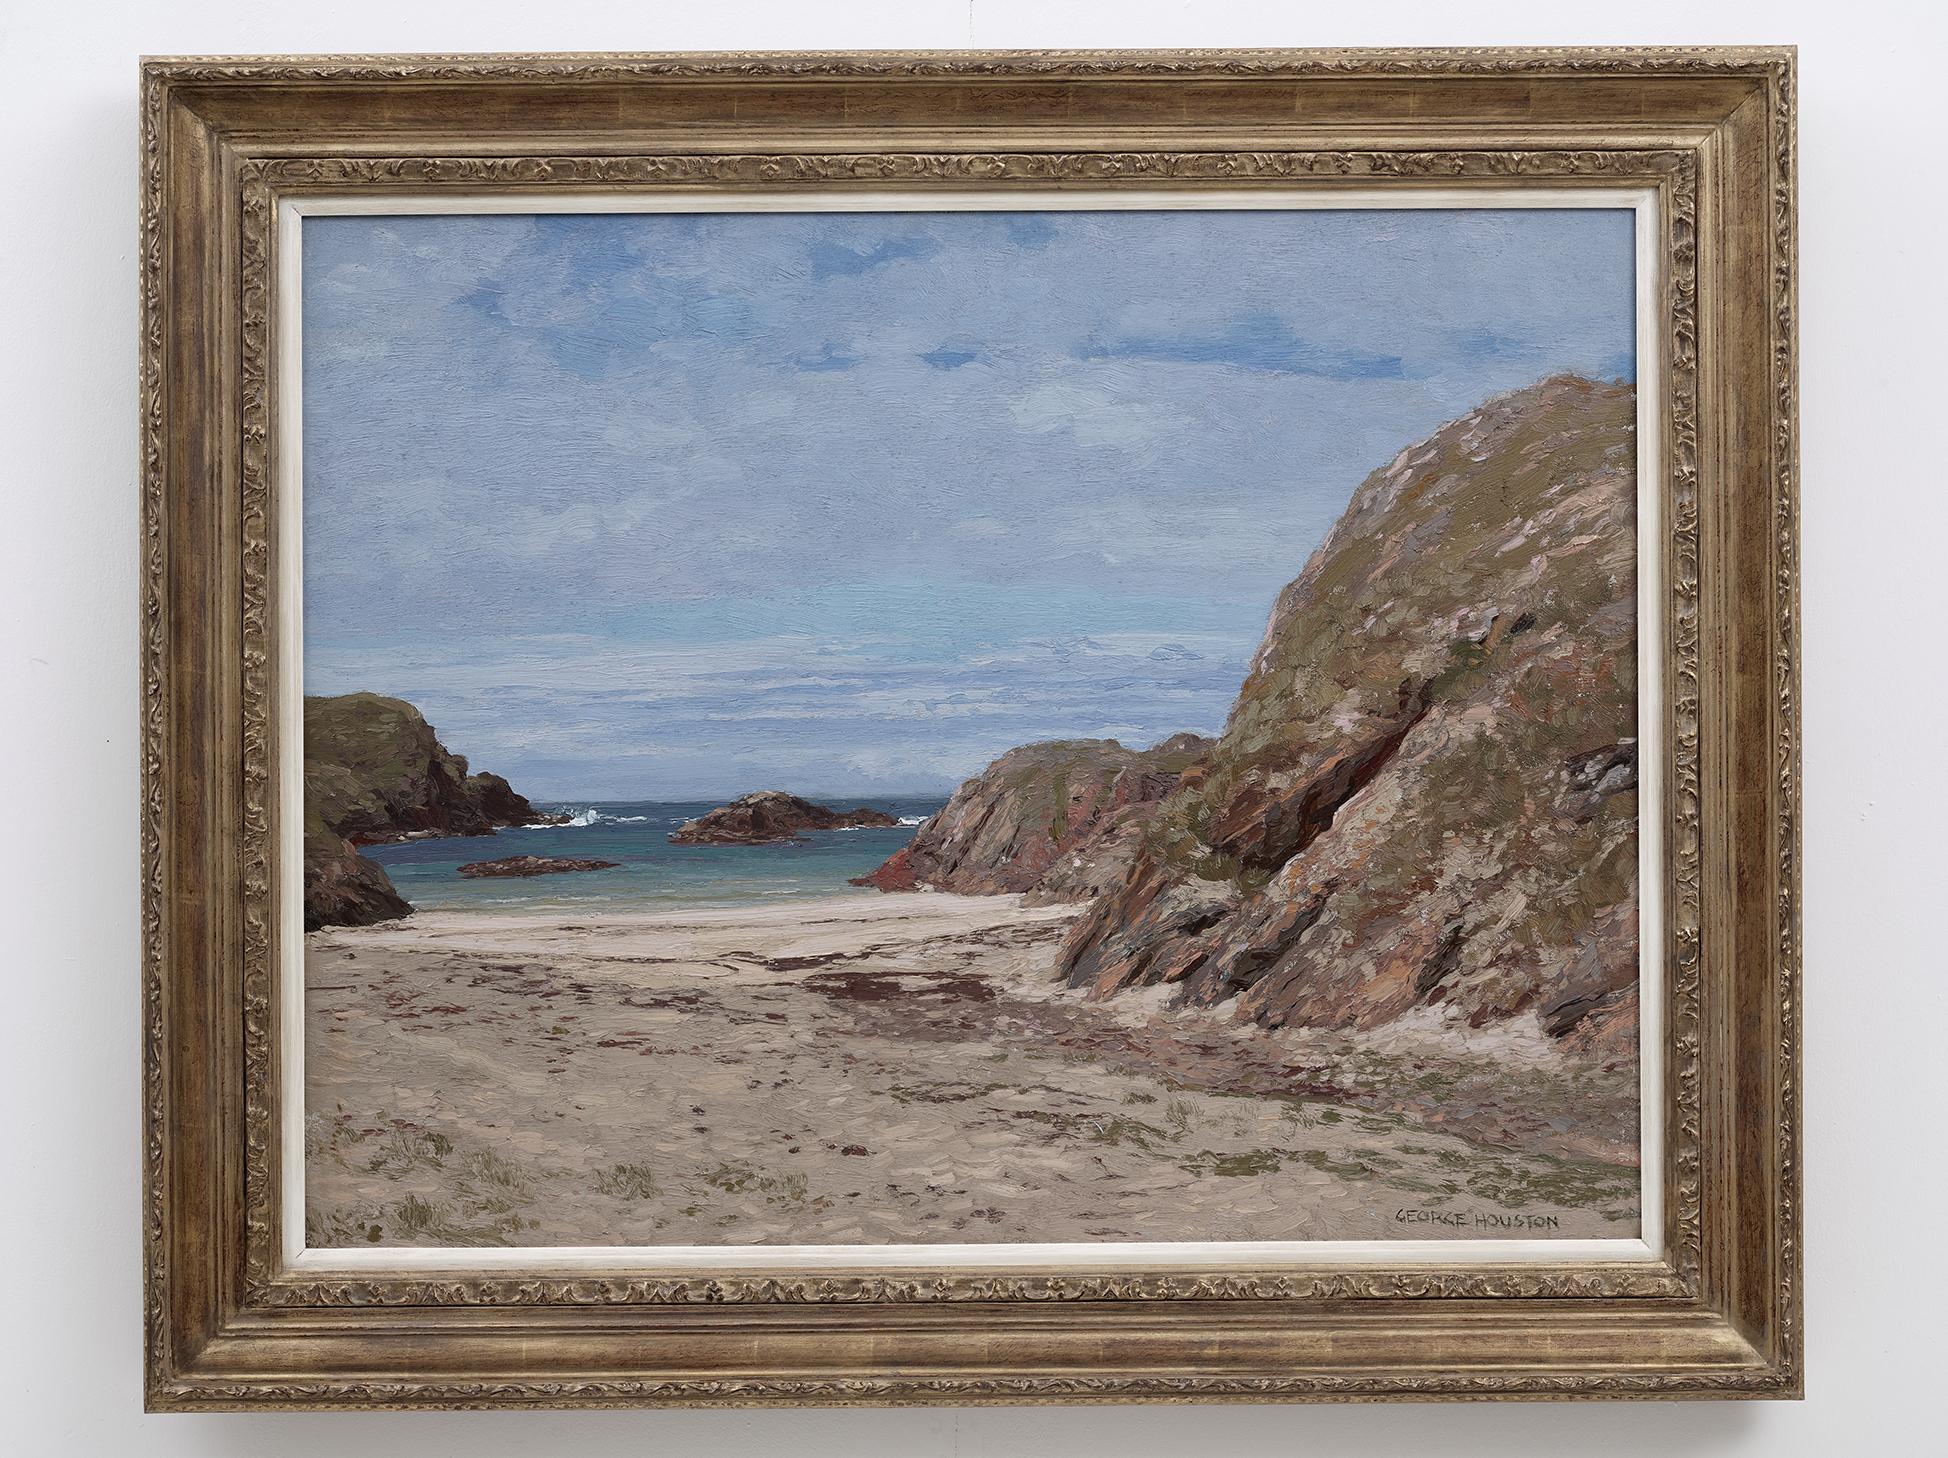 George Houston Landscape Painting - 'The West Coast of Scotland' 20th Century landscape painting of rocks, beach